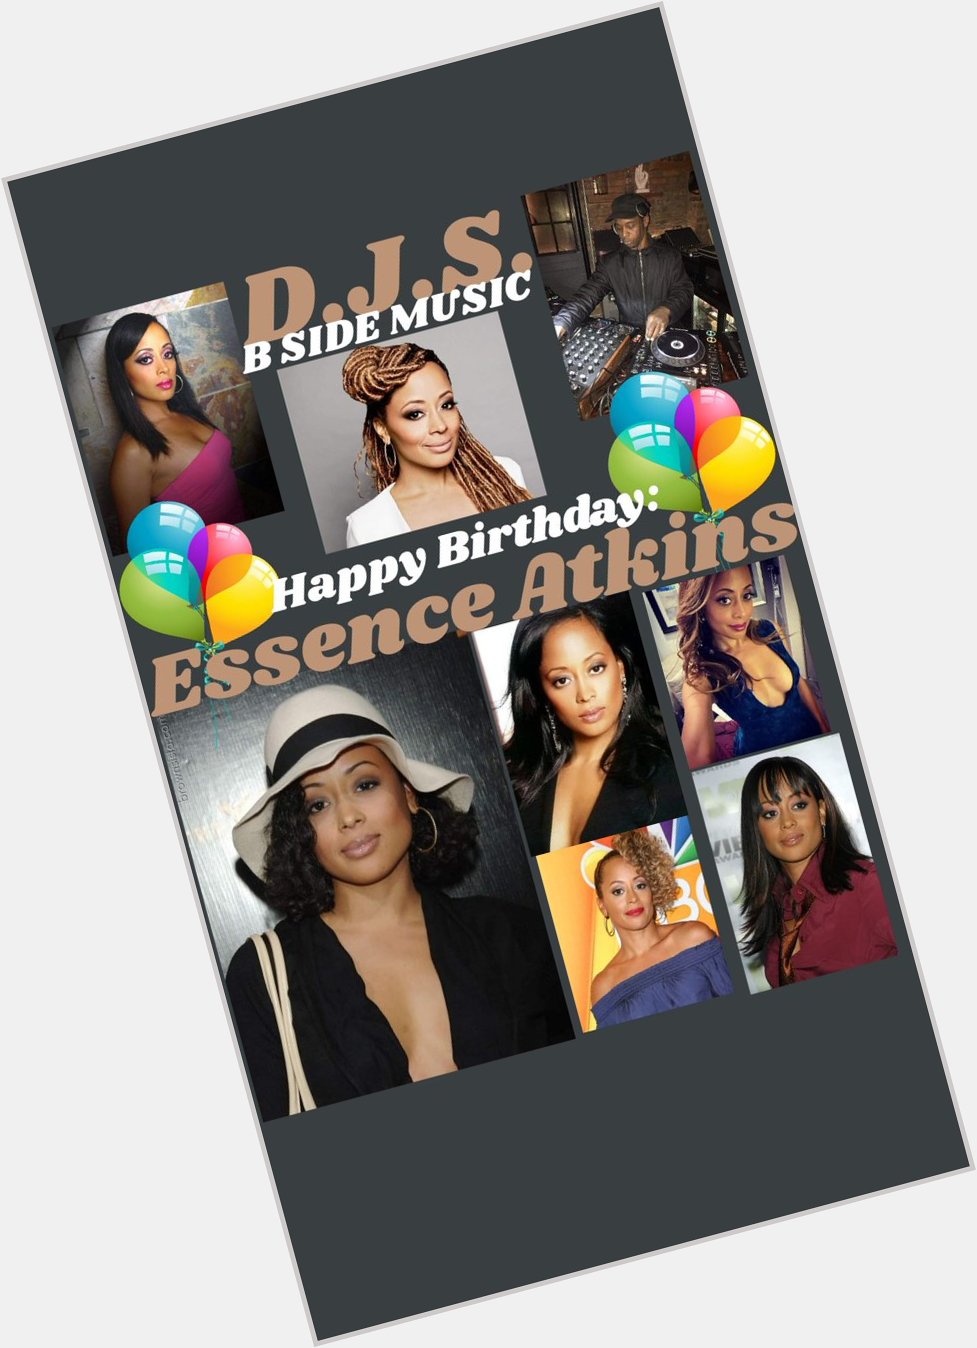 I(D.J.S.) saying Happy Birthday to Actress \"ESSENCE ATKINS\"!!!! 